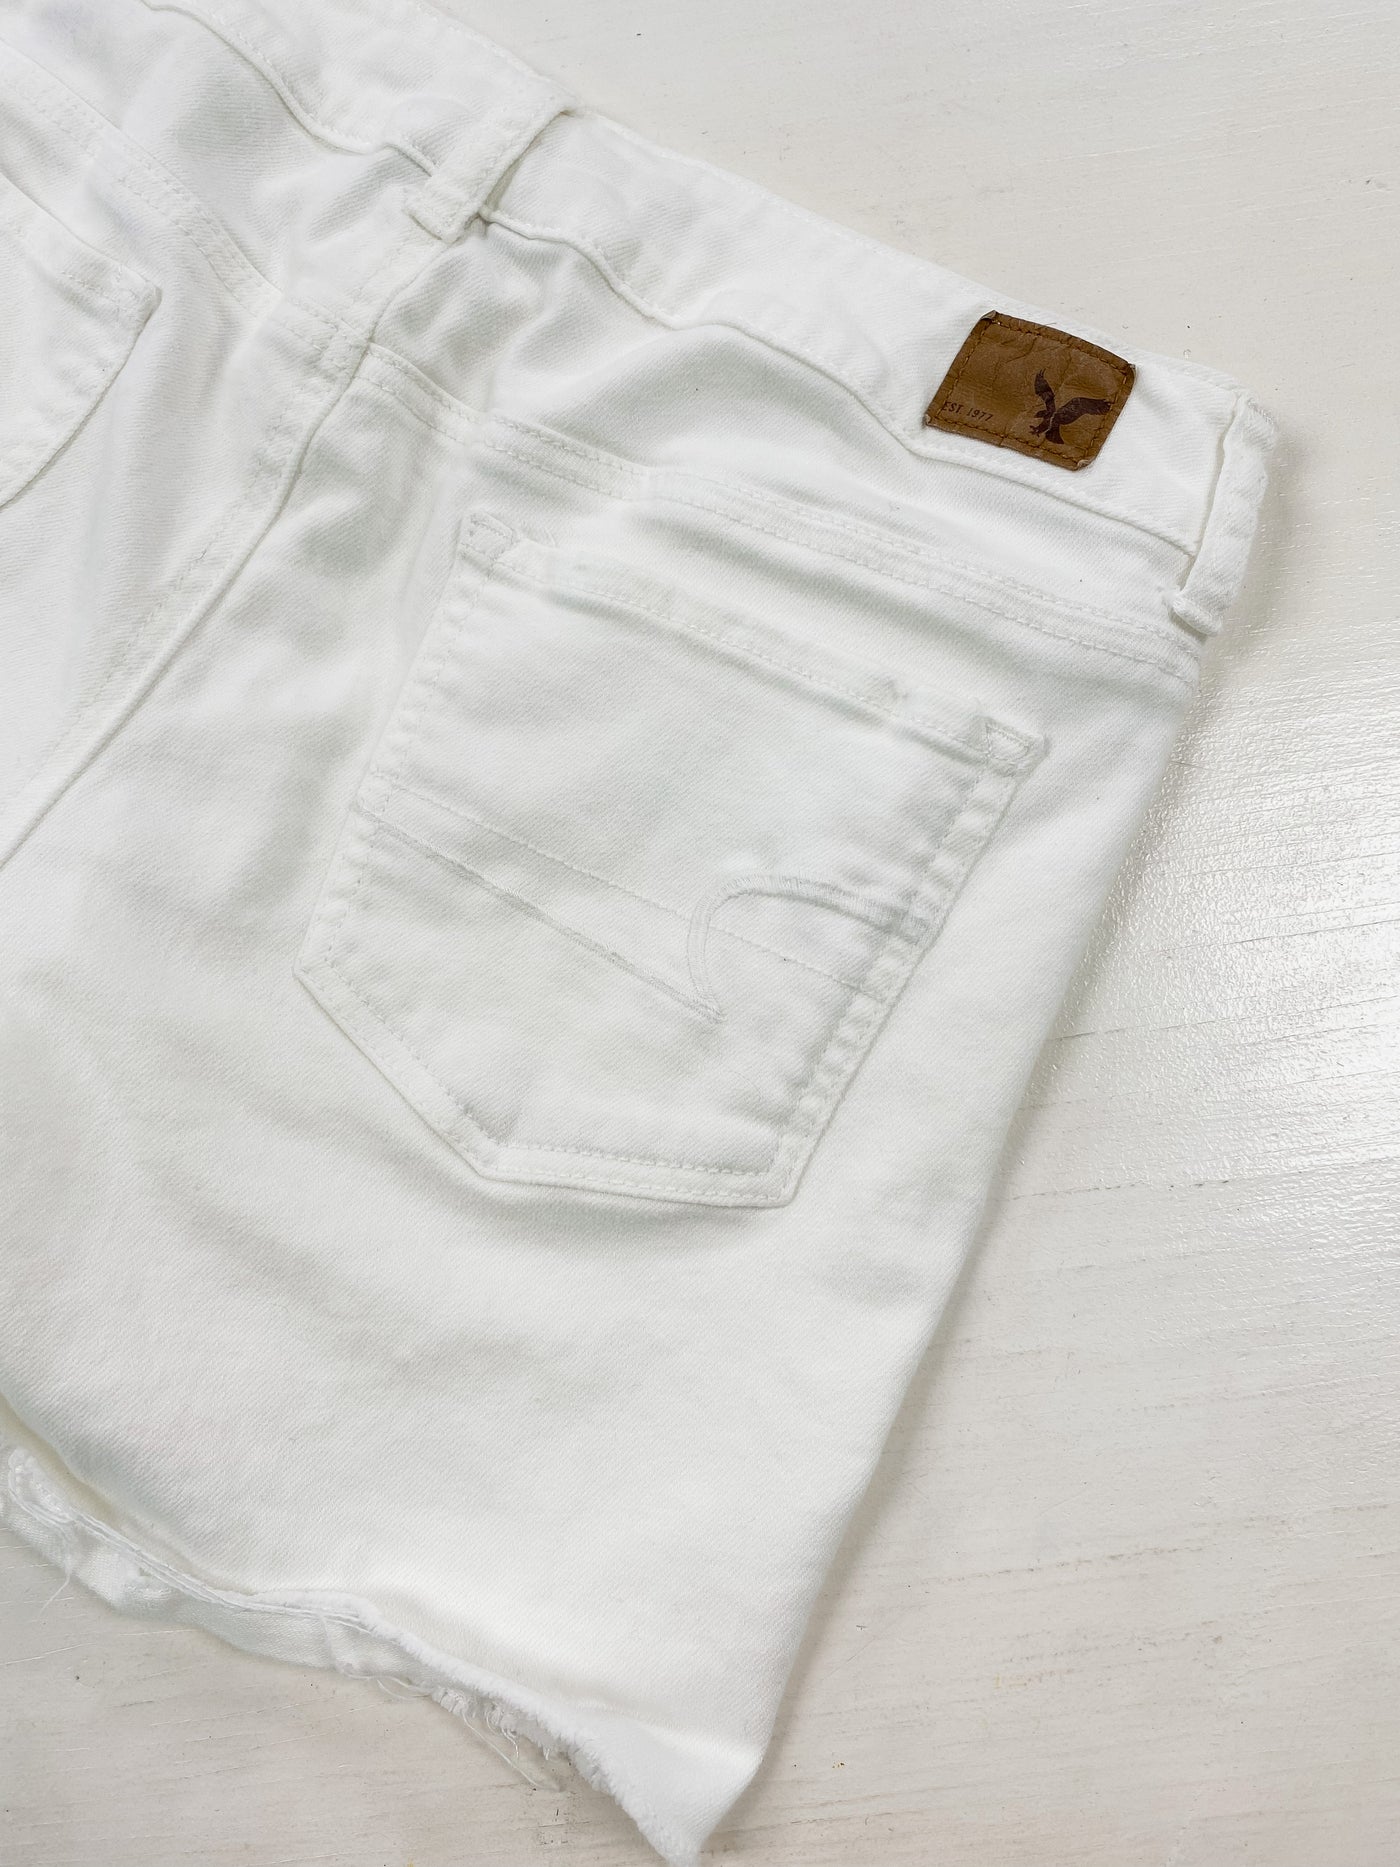 American Eagle Stretchy White Denim Shorts